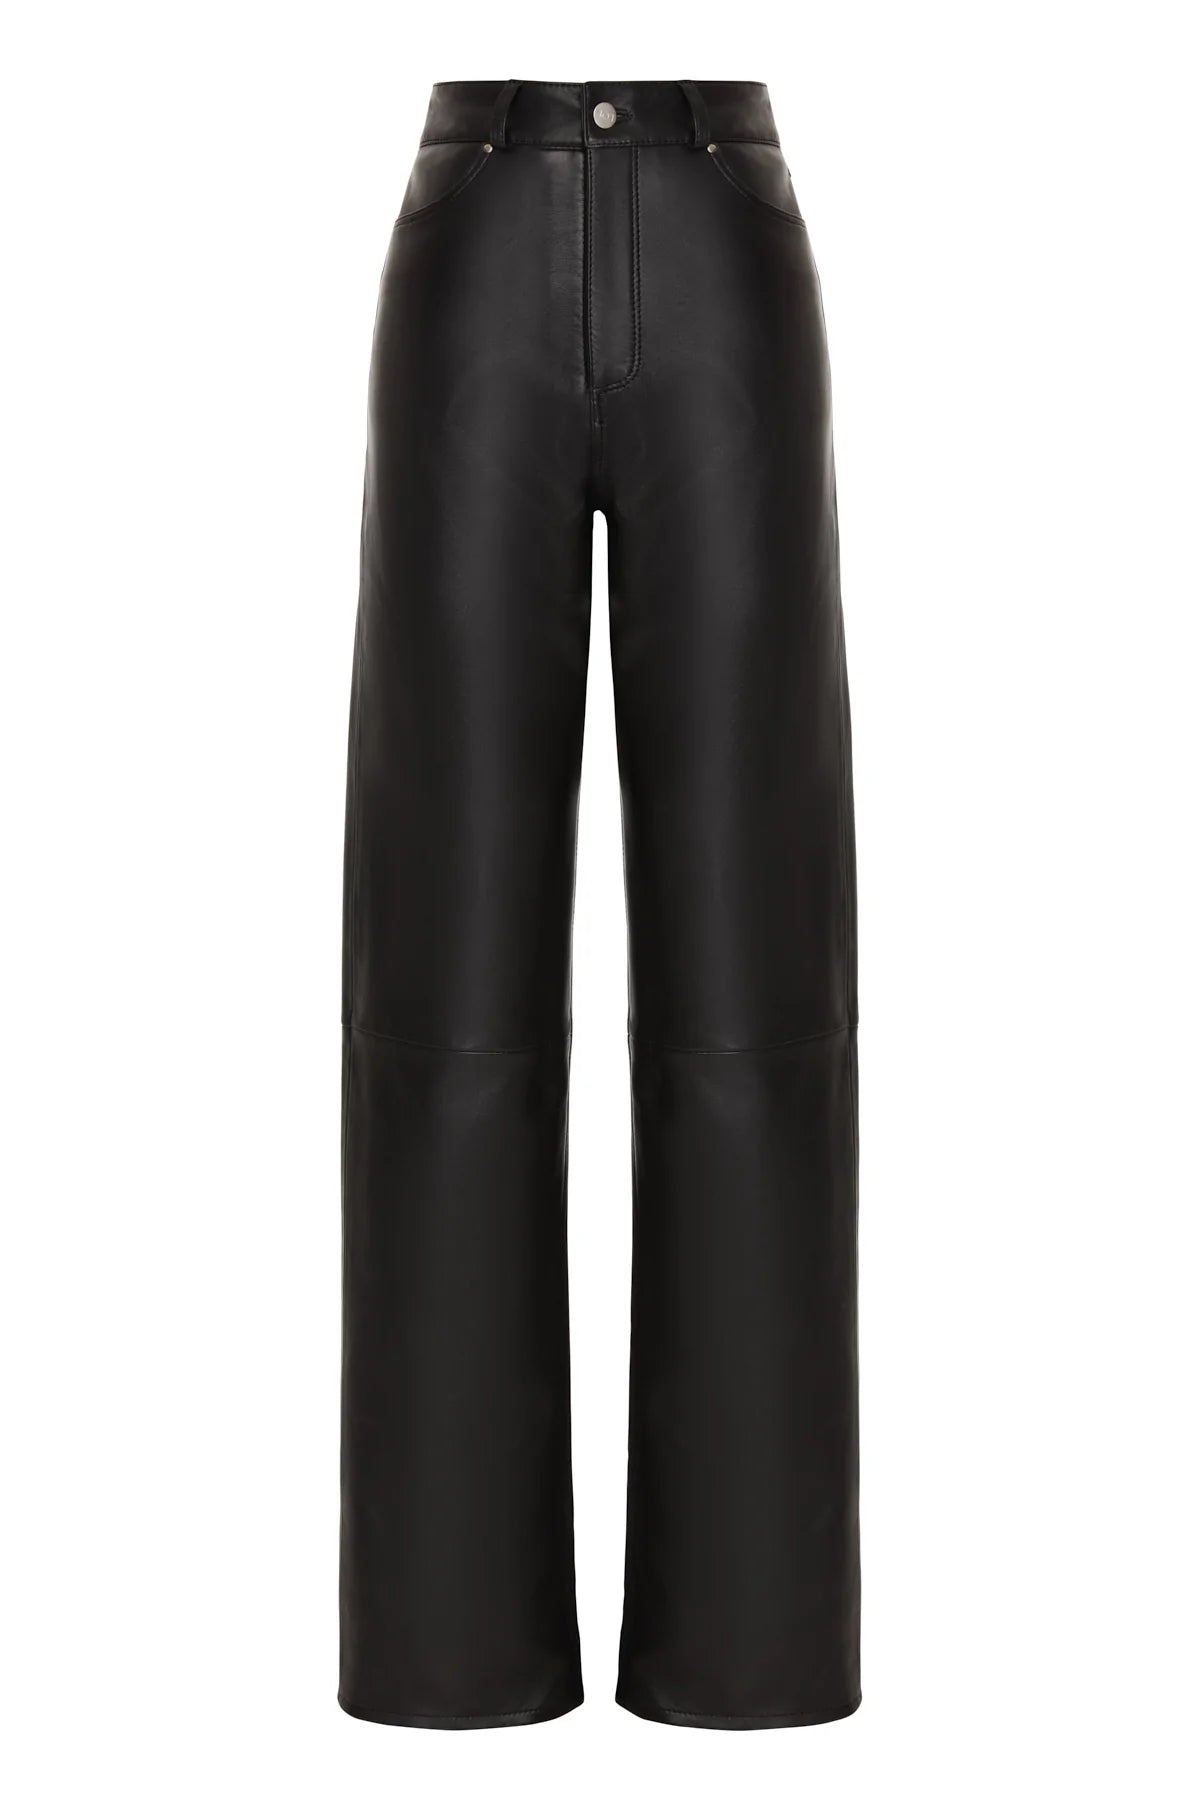 Astrid - Black Leather Pants